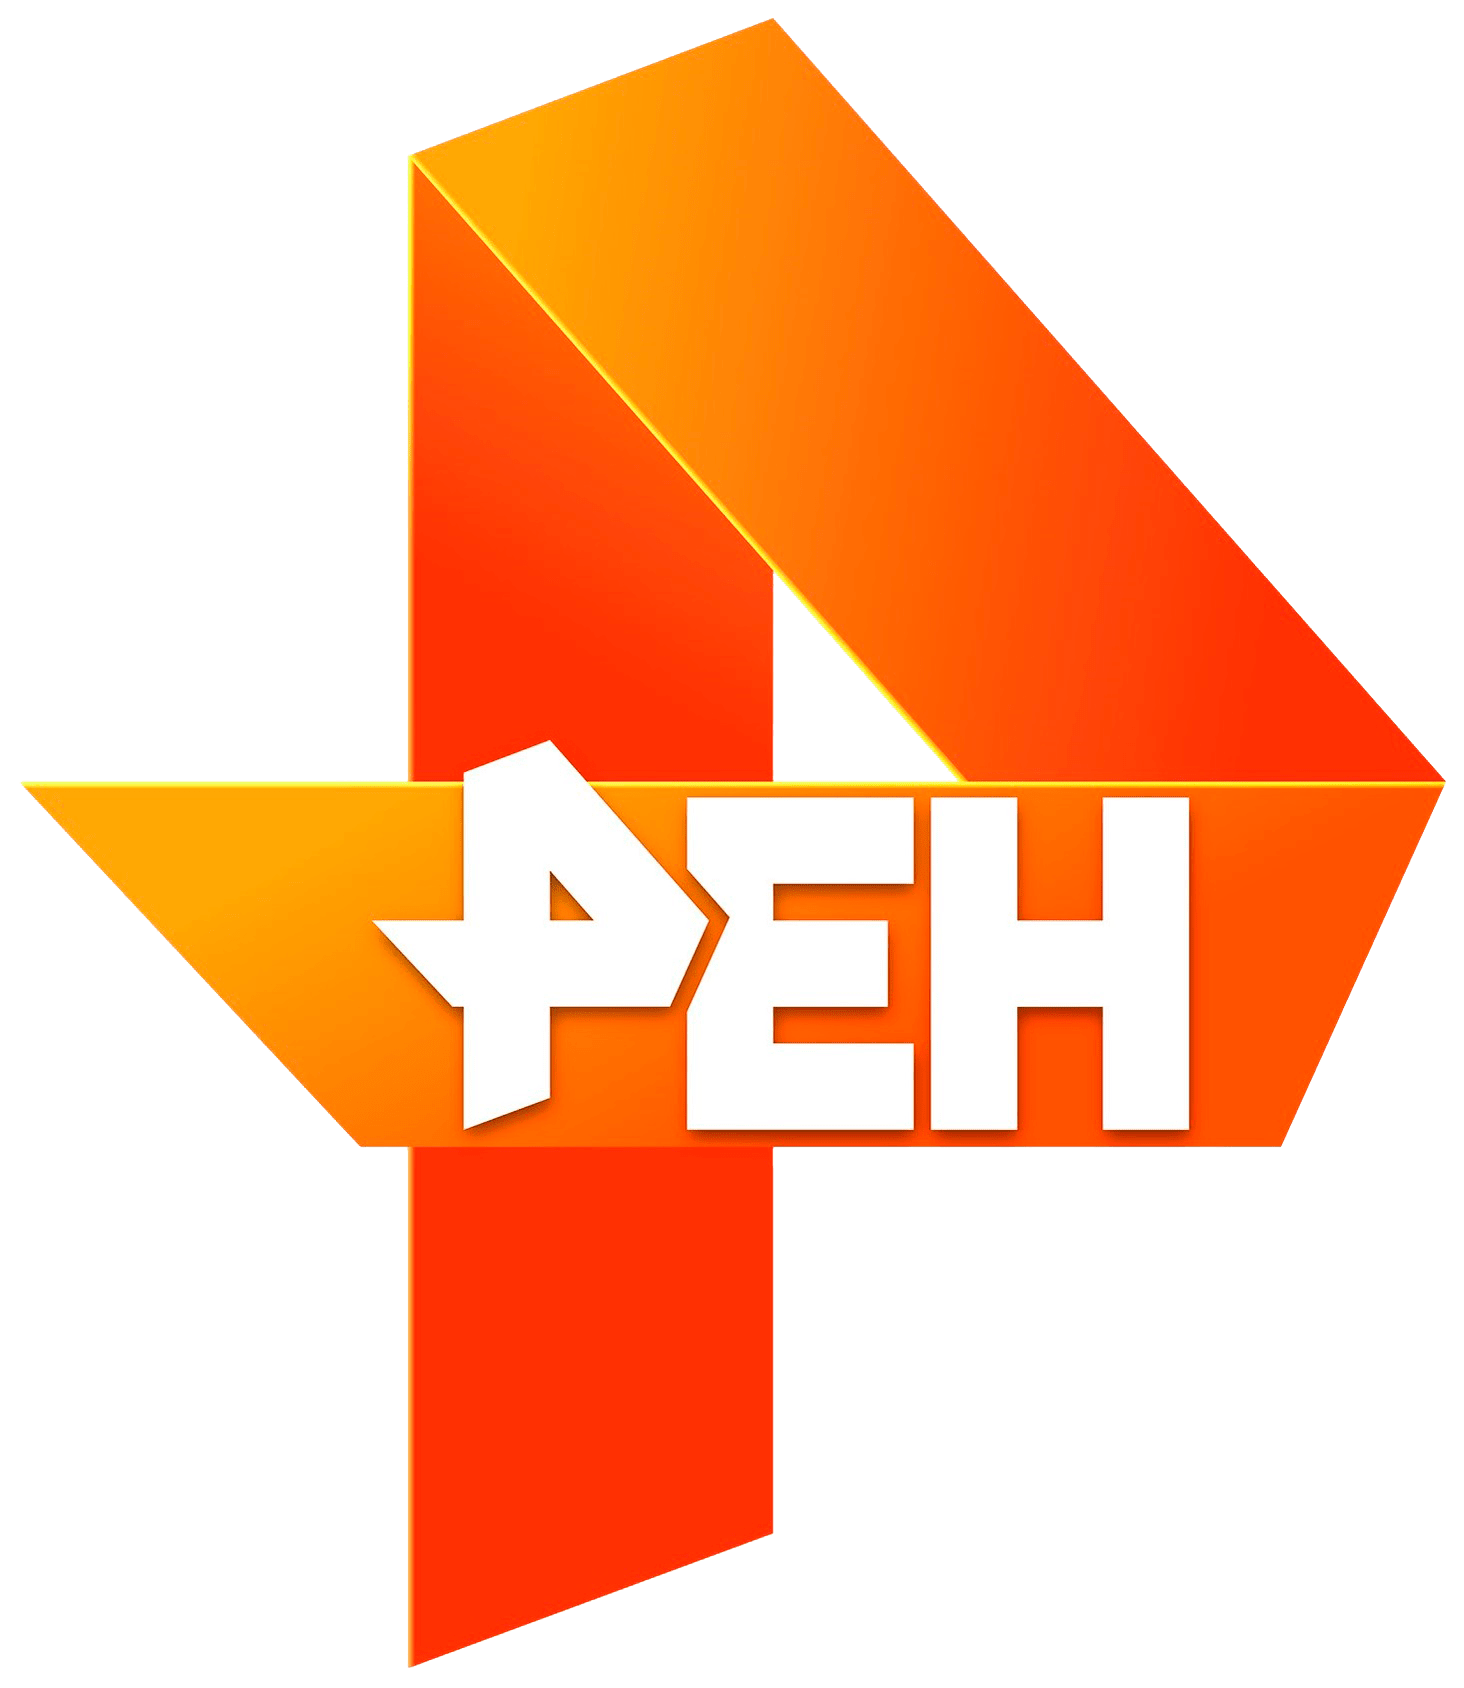 Раземщение рекламы РЕН ТВ, г. Рязань